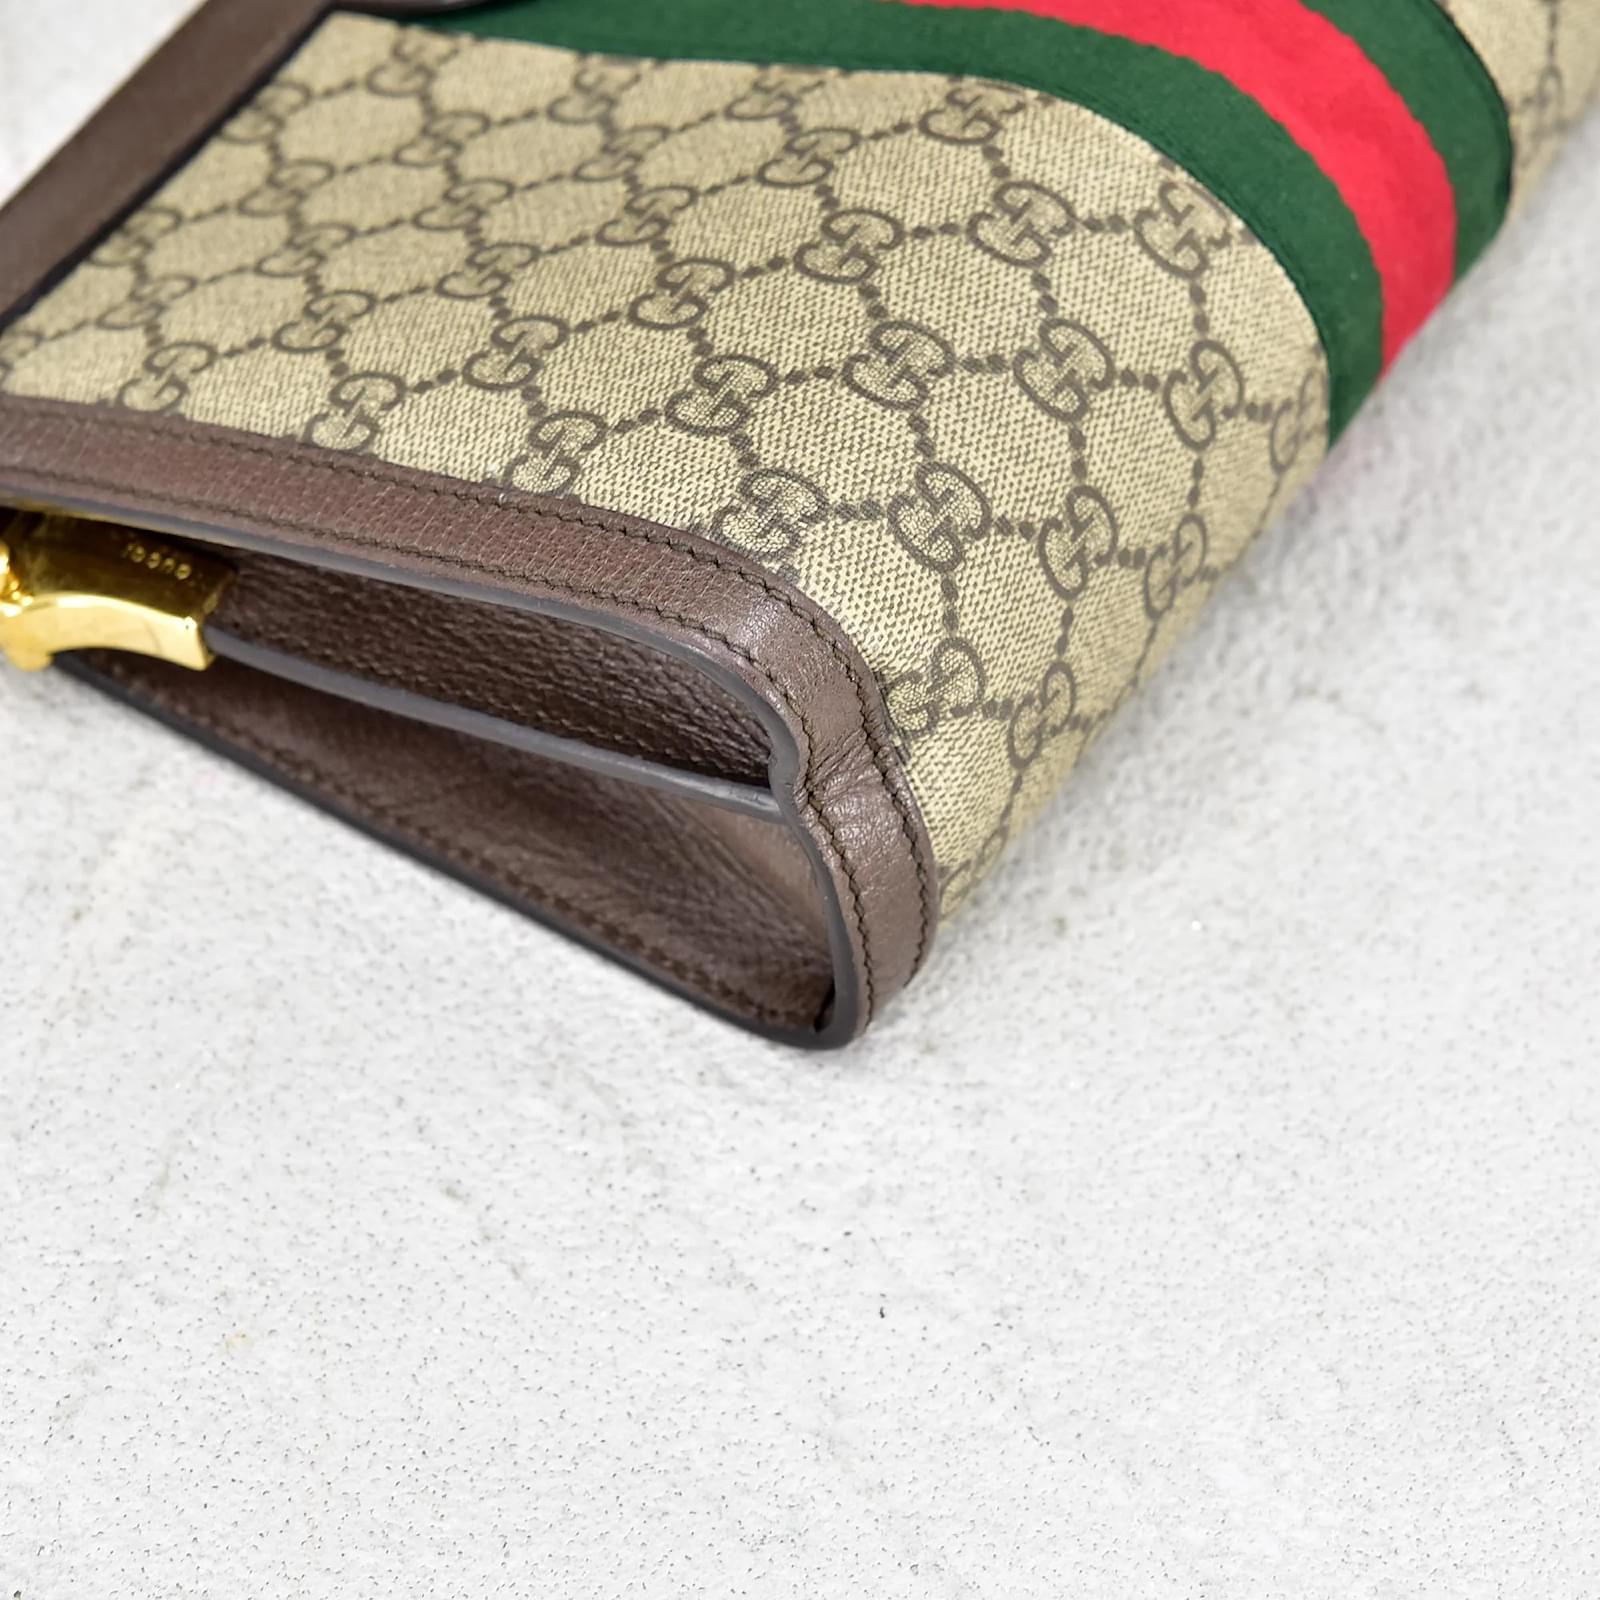 Ophidia gg supreme cloth handbag Gucci Brown in Cloth - 27464367